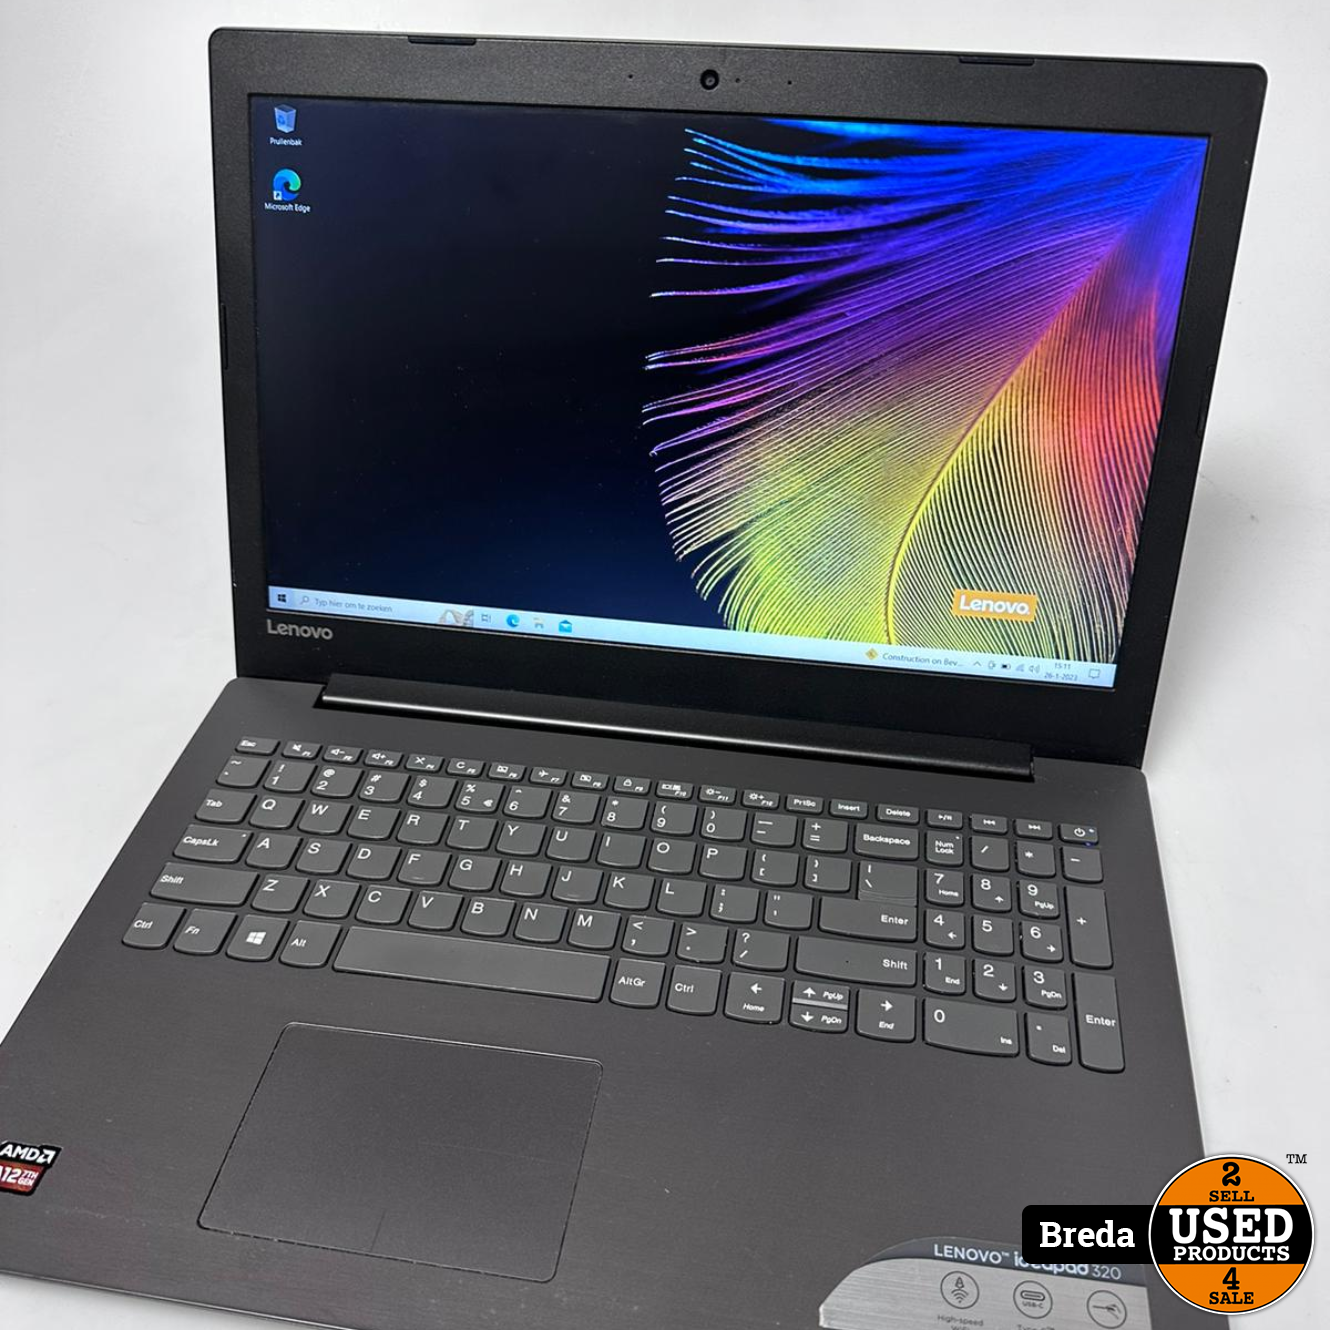 Lenovo Ideapad 320 laptop | AMD A12-9720P HDD 128GB SSD 16GB RAM Radeon R7 Graphics Windows 10 | Met garantie - Used Products Breda